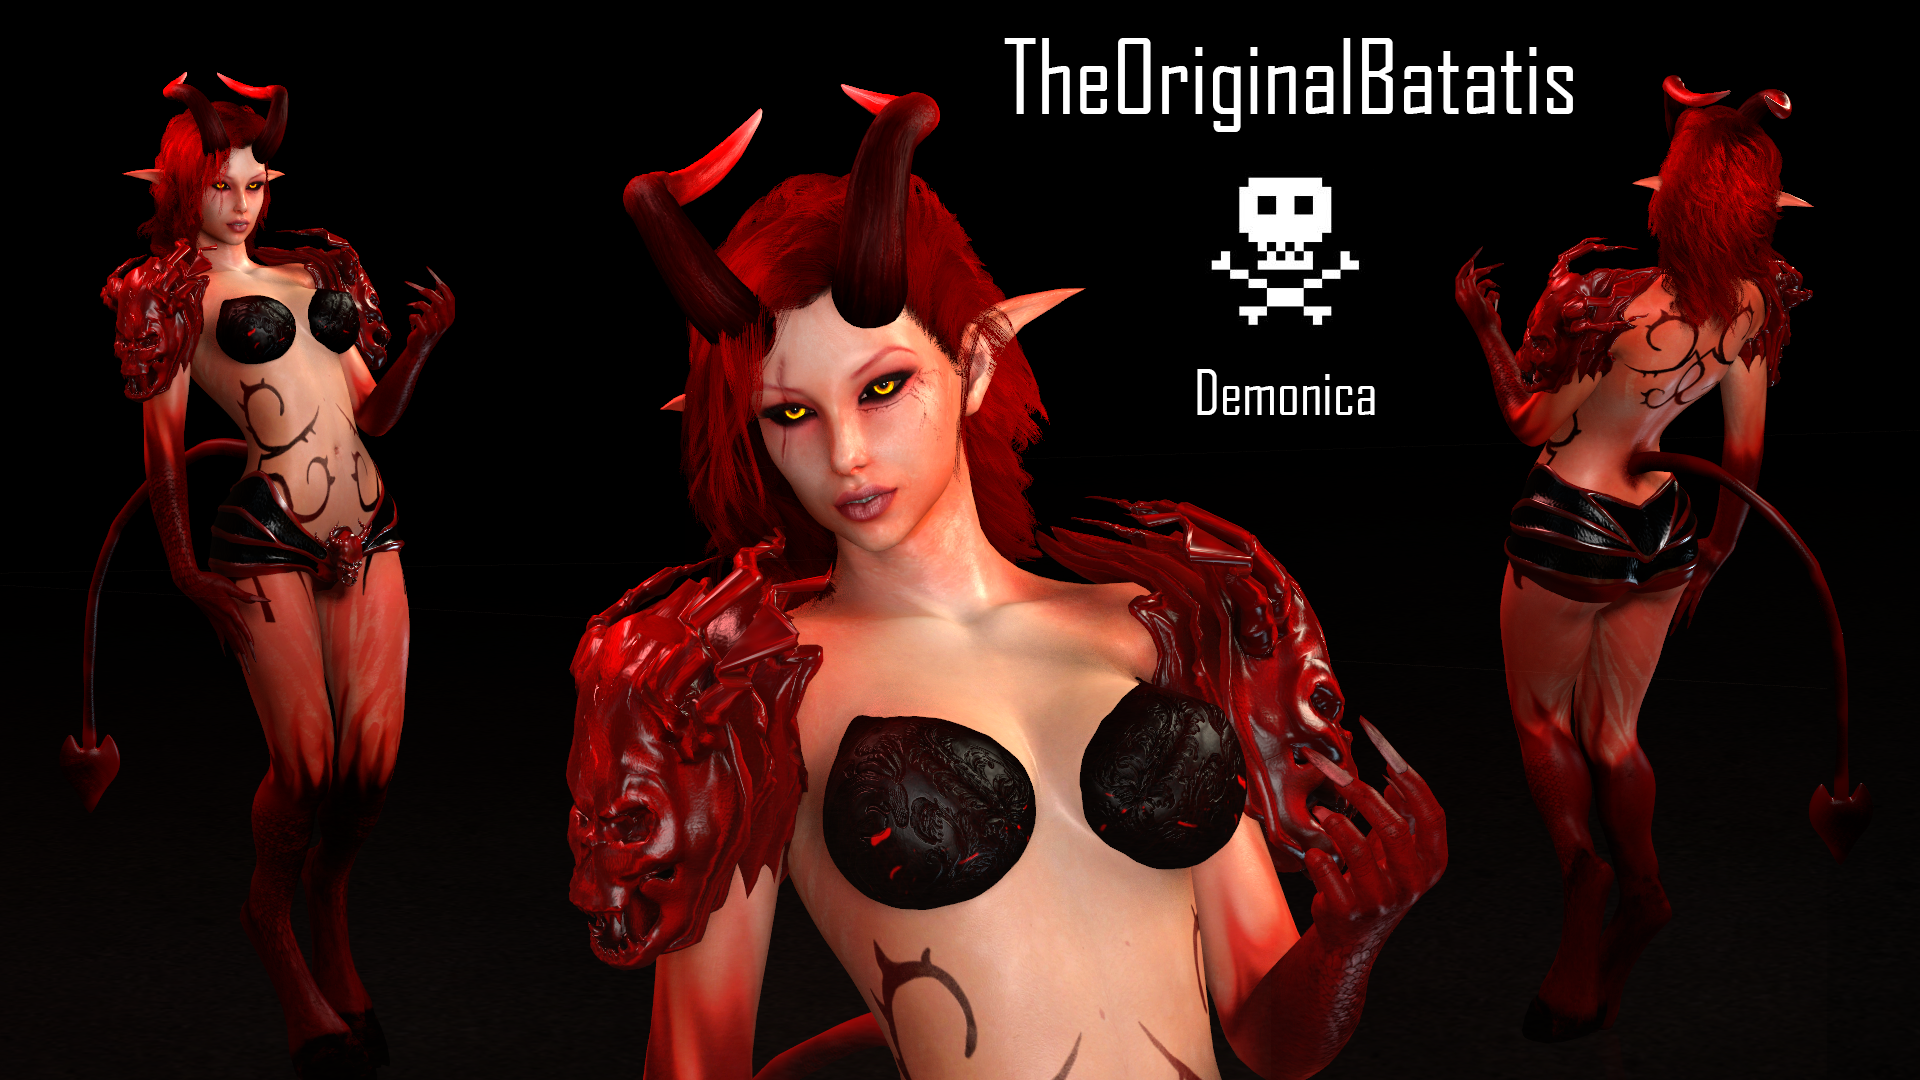 TheOriginalBatatis - Demonica.png